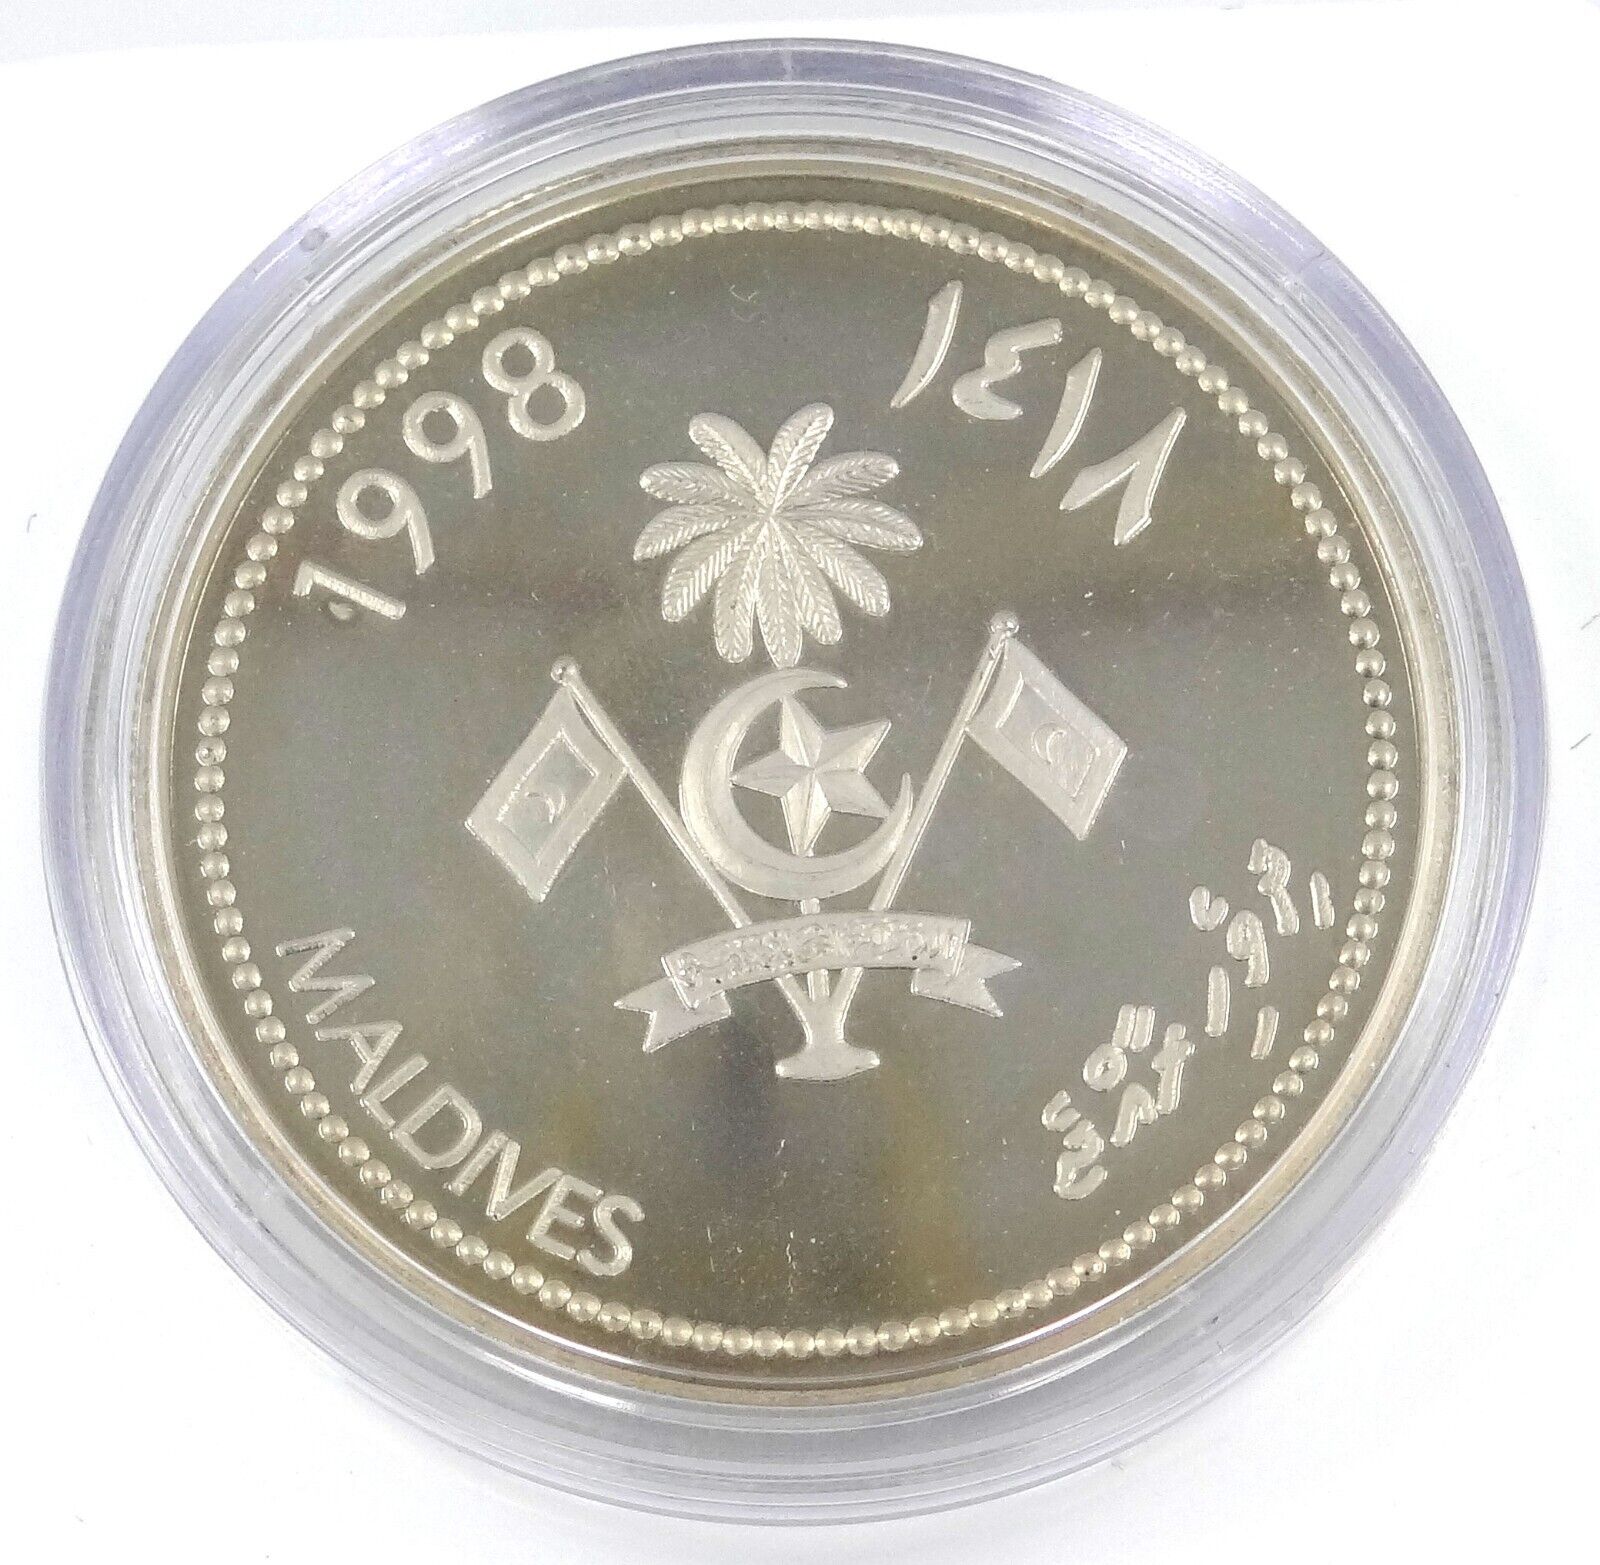 25g Copper-Nickle Coin 1998 5 Rufiyaa Maldives International Year of the Reef-classypw.com-1